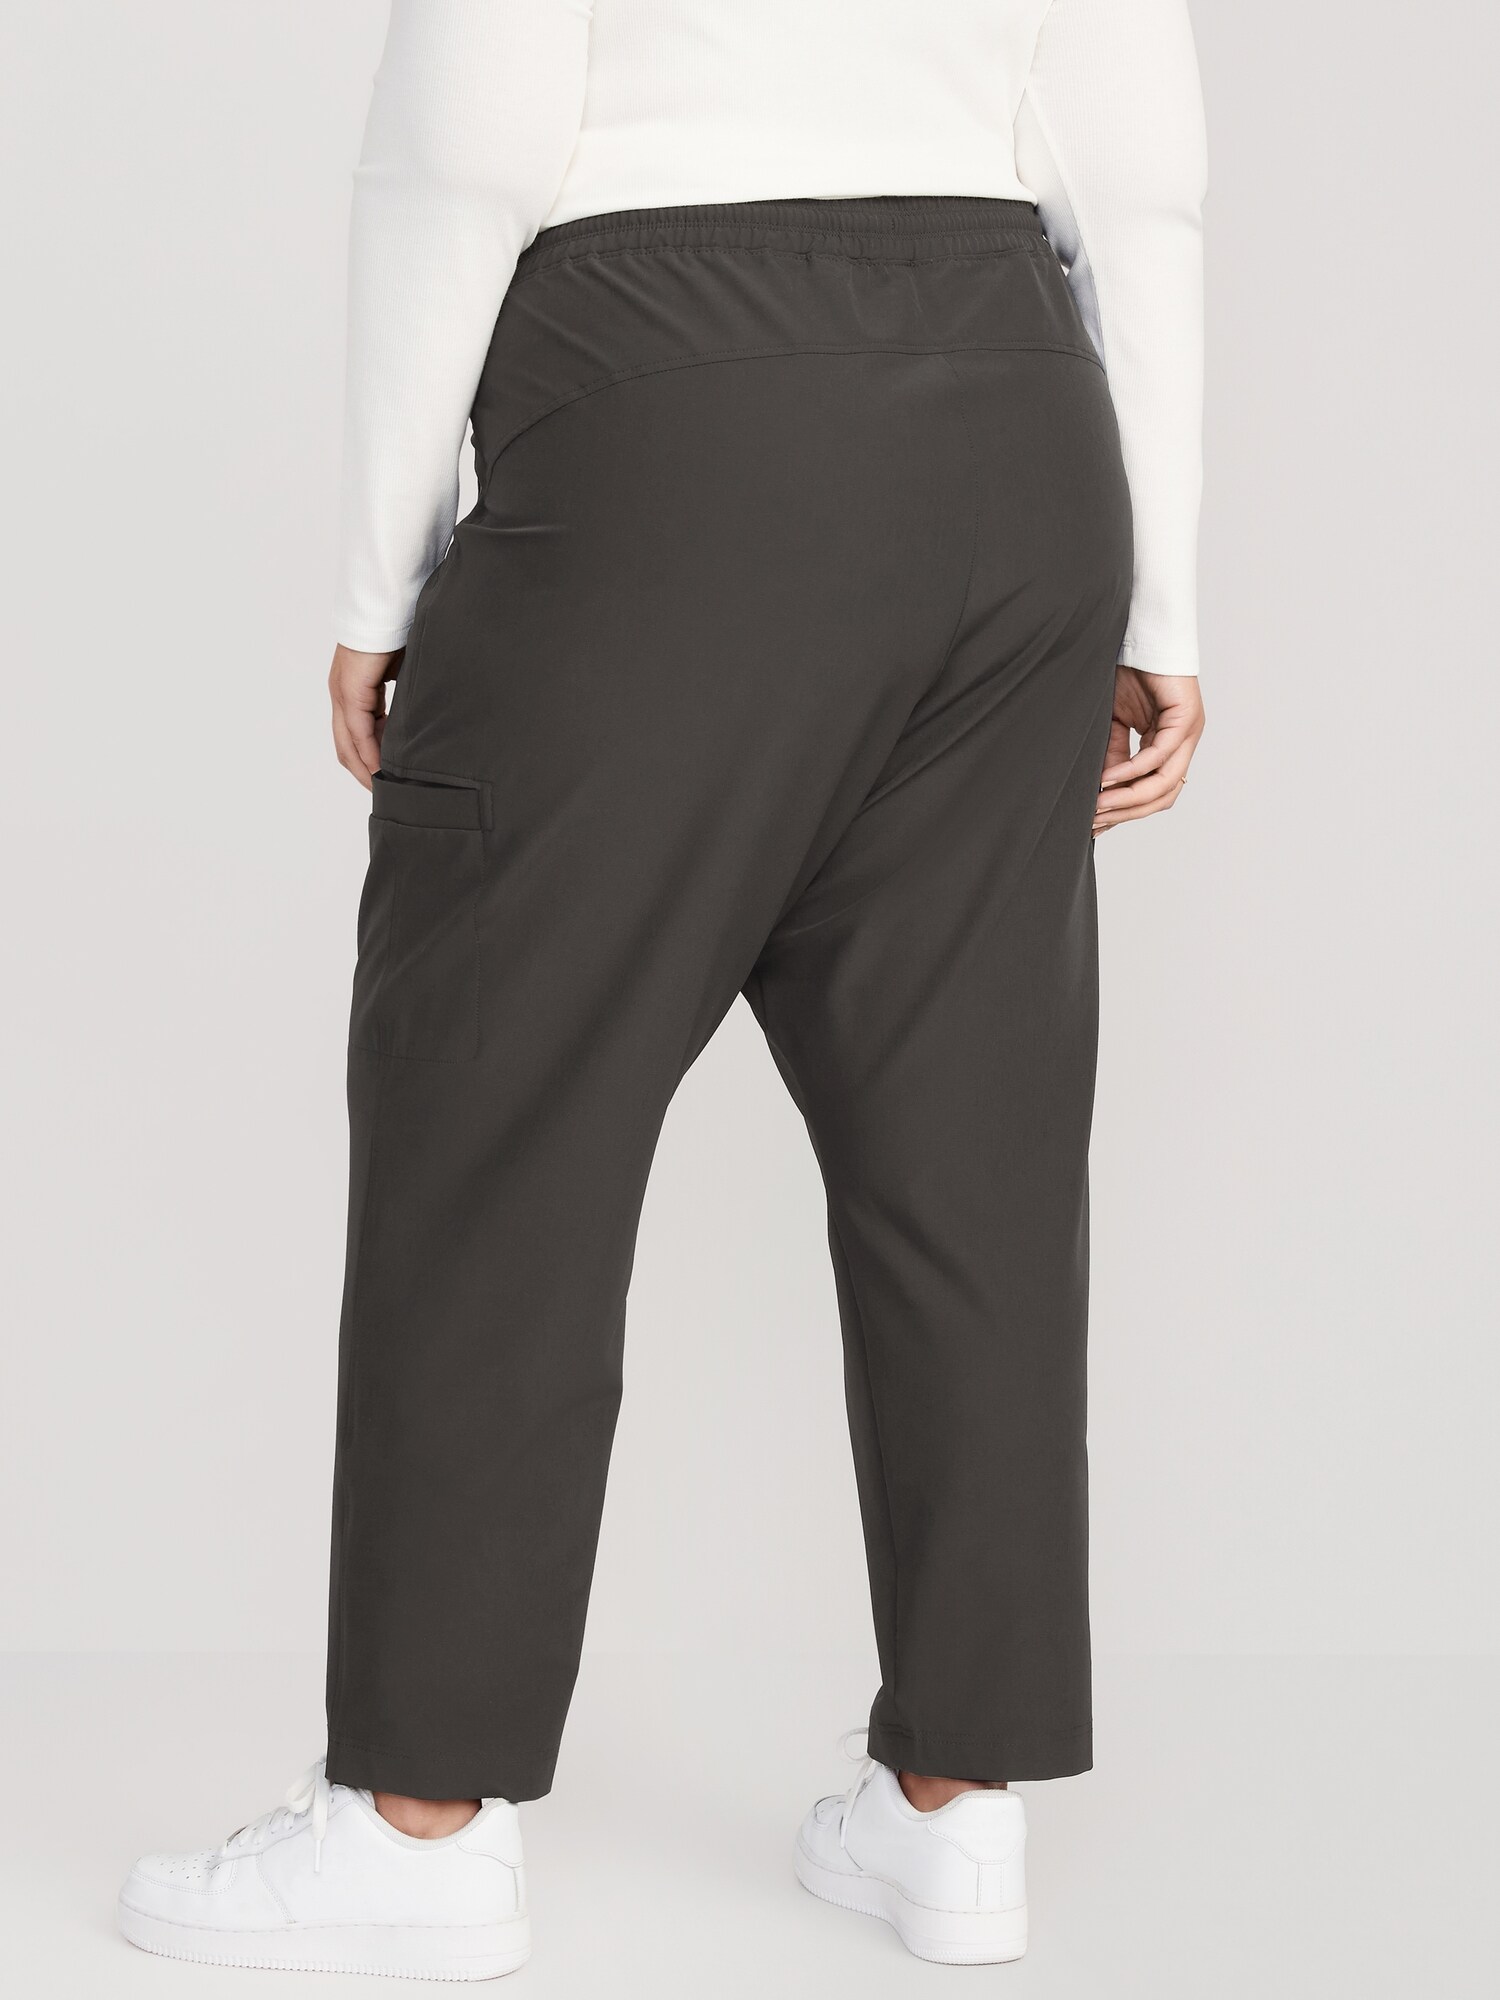 Tessa Jogger Pants  Shop Black, Navy Pull on Pants Style